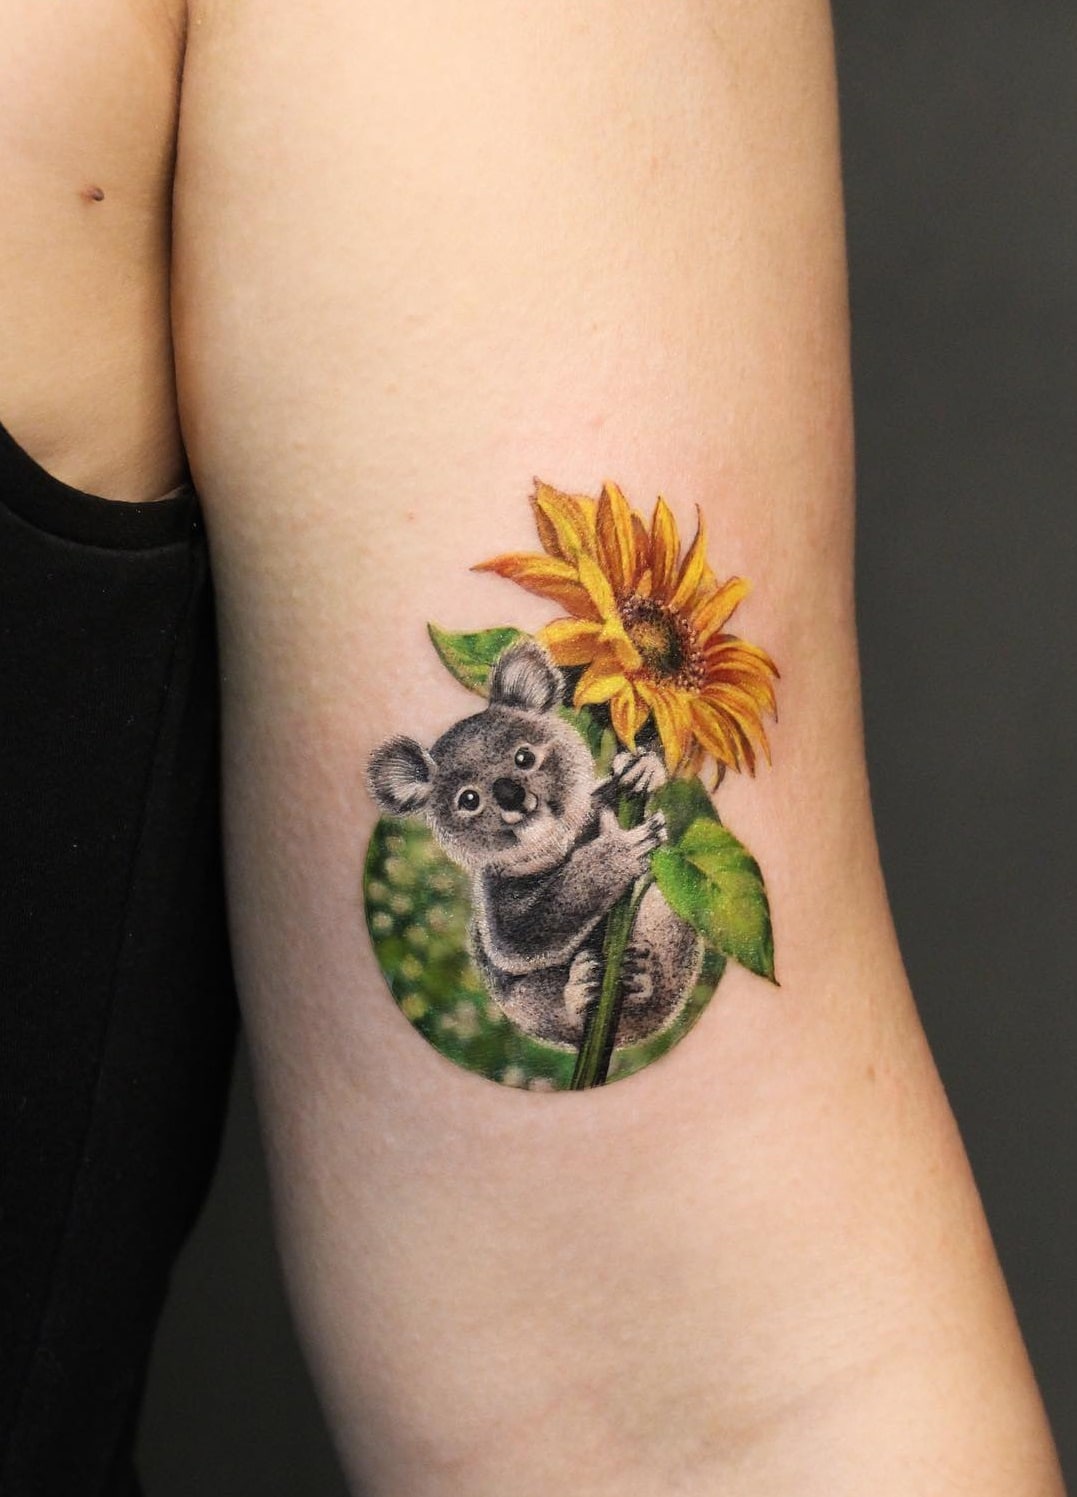 feminine rose big 8.25" temporary tattoo meaningful tattoos for guys |  eBay